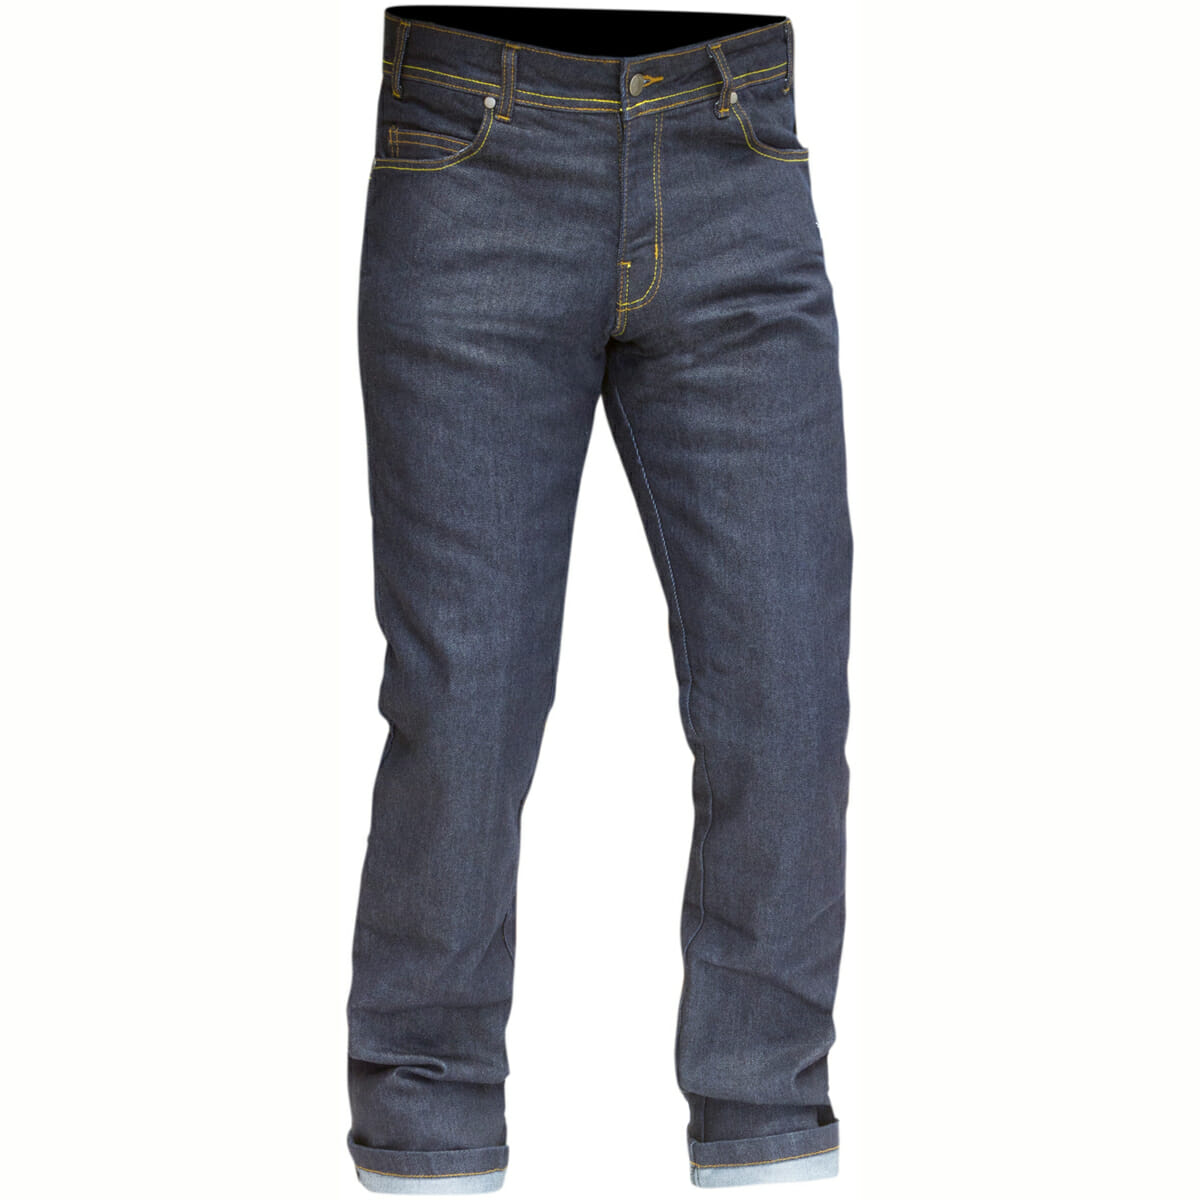 armored jeans ruggedmotorbikejeans.com